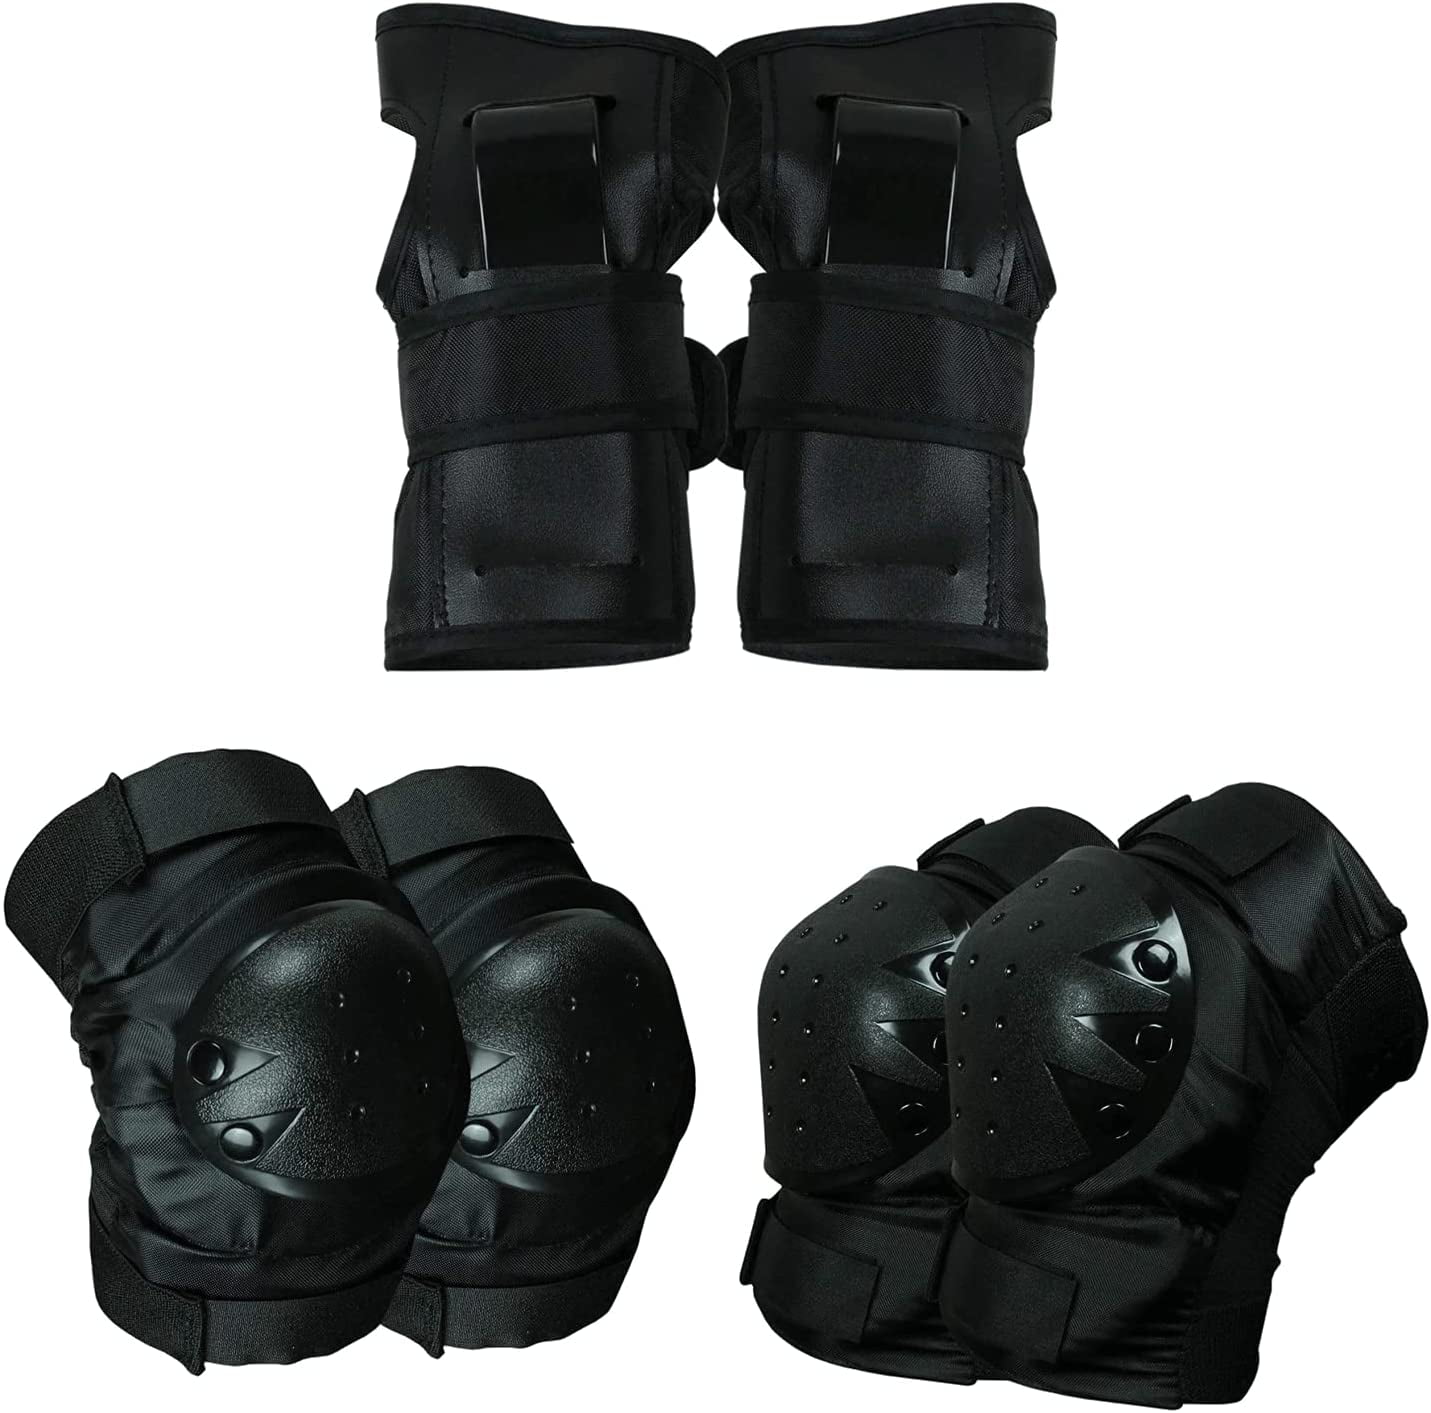 MELLO Matt Black Skateboard Helmet with 6pcs Protection Set Elbow Knee & Wrist Pads